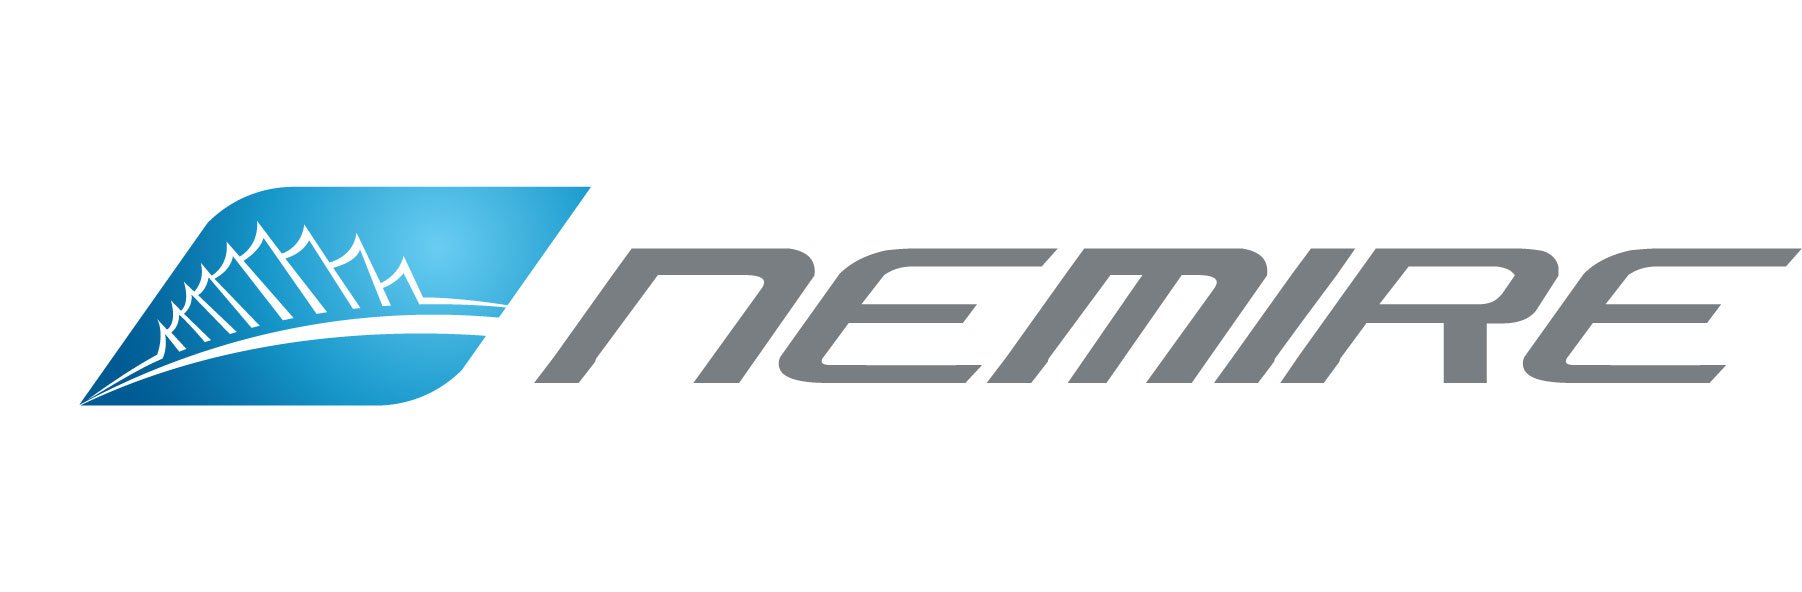 Nemire Logo Final.jpg